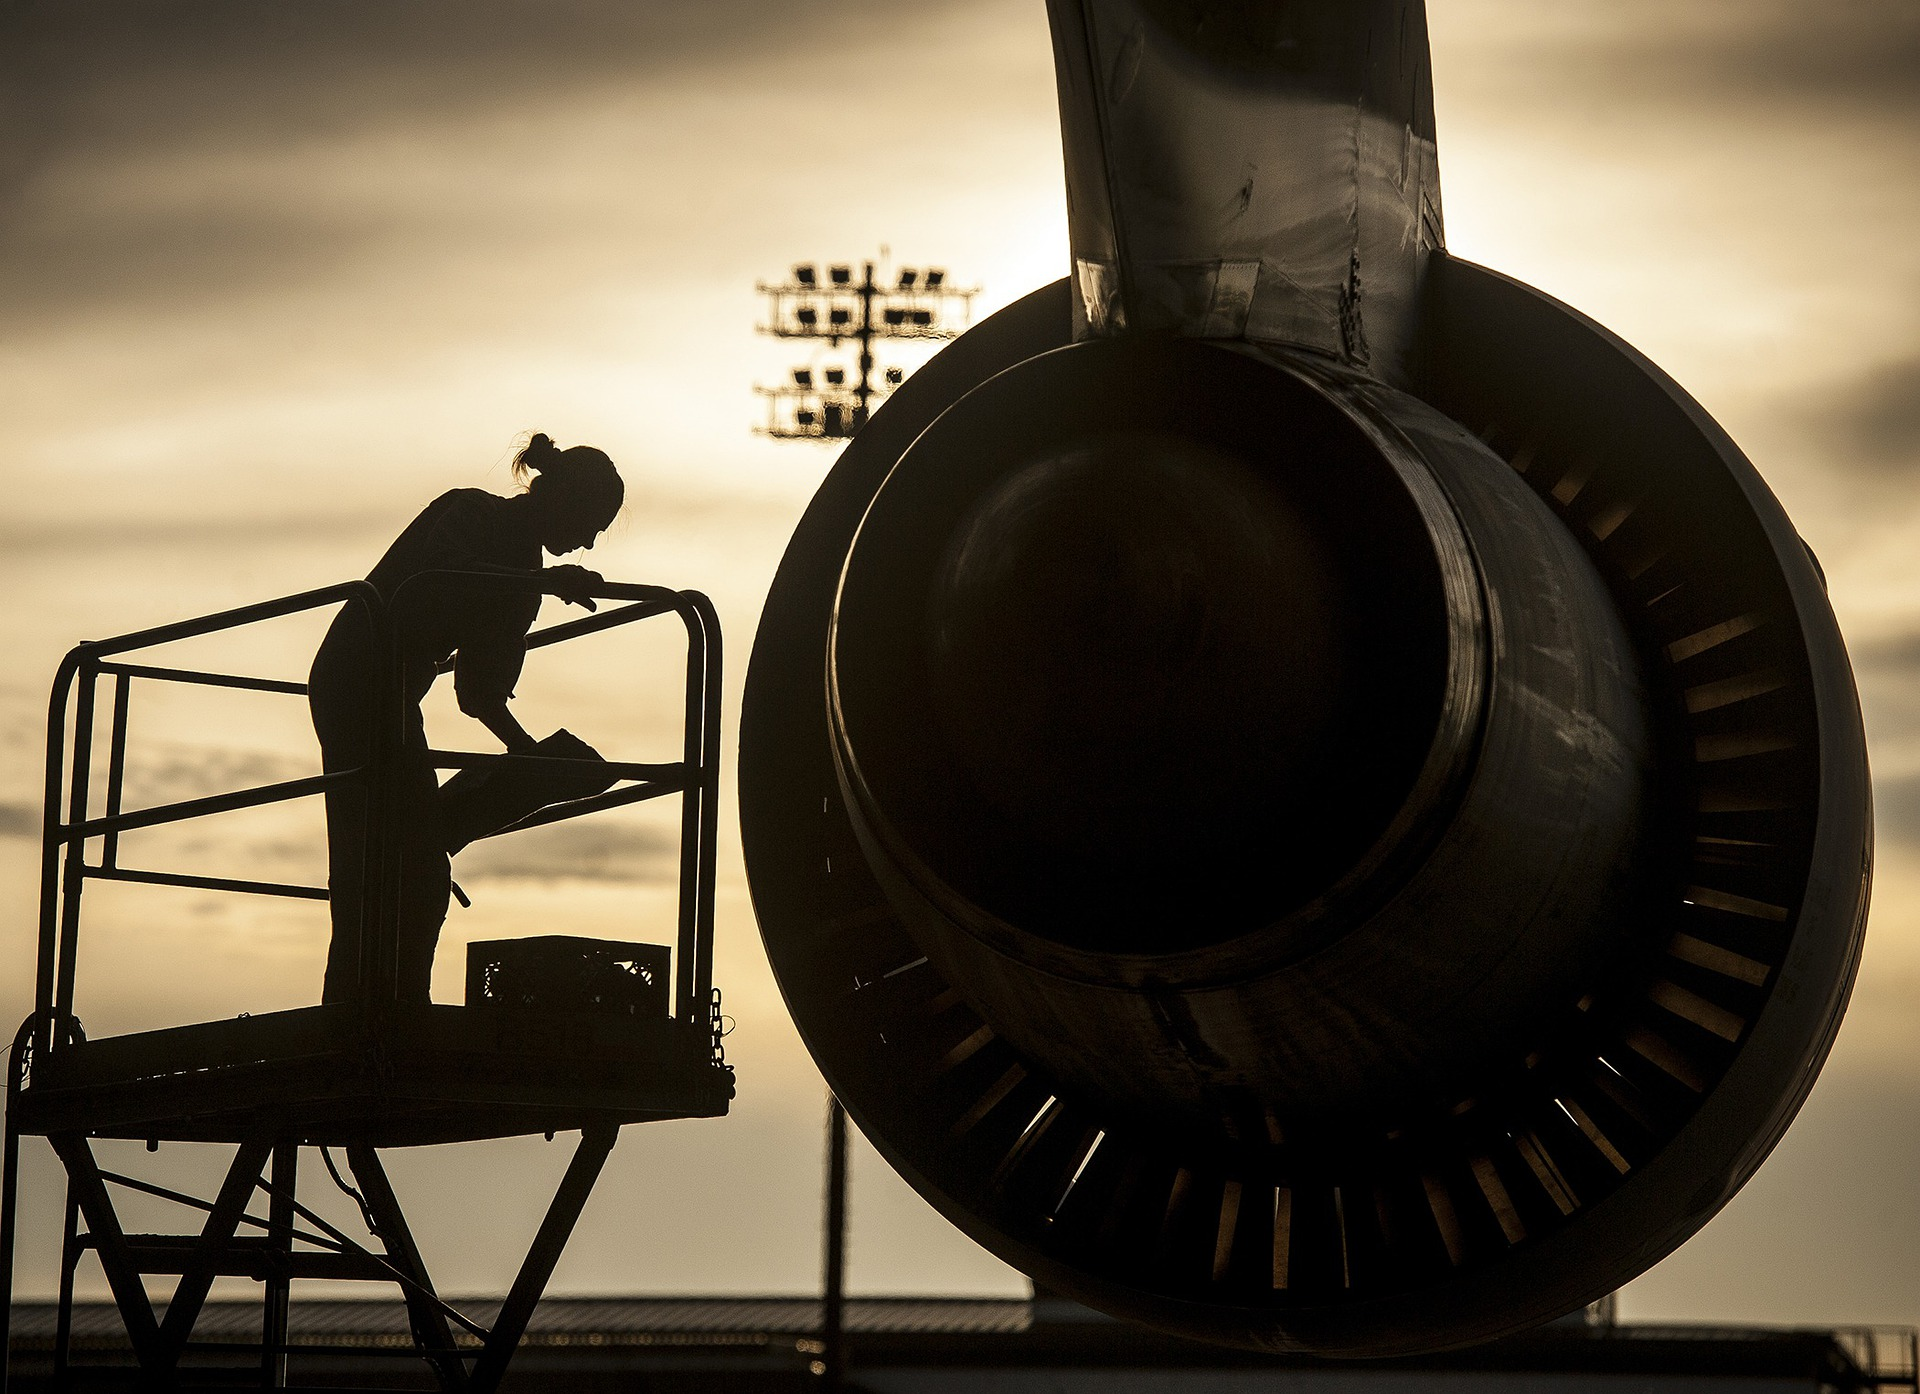 An aircraft mechanic performing engine checks on an aircraft.